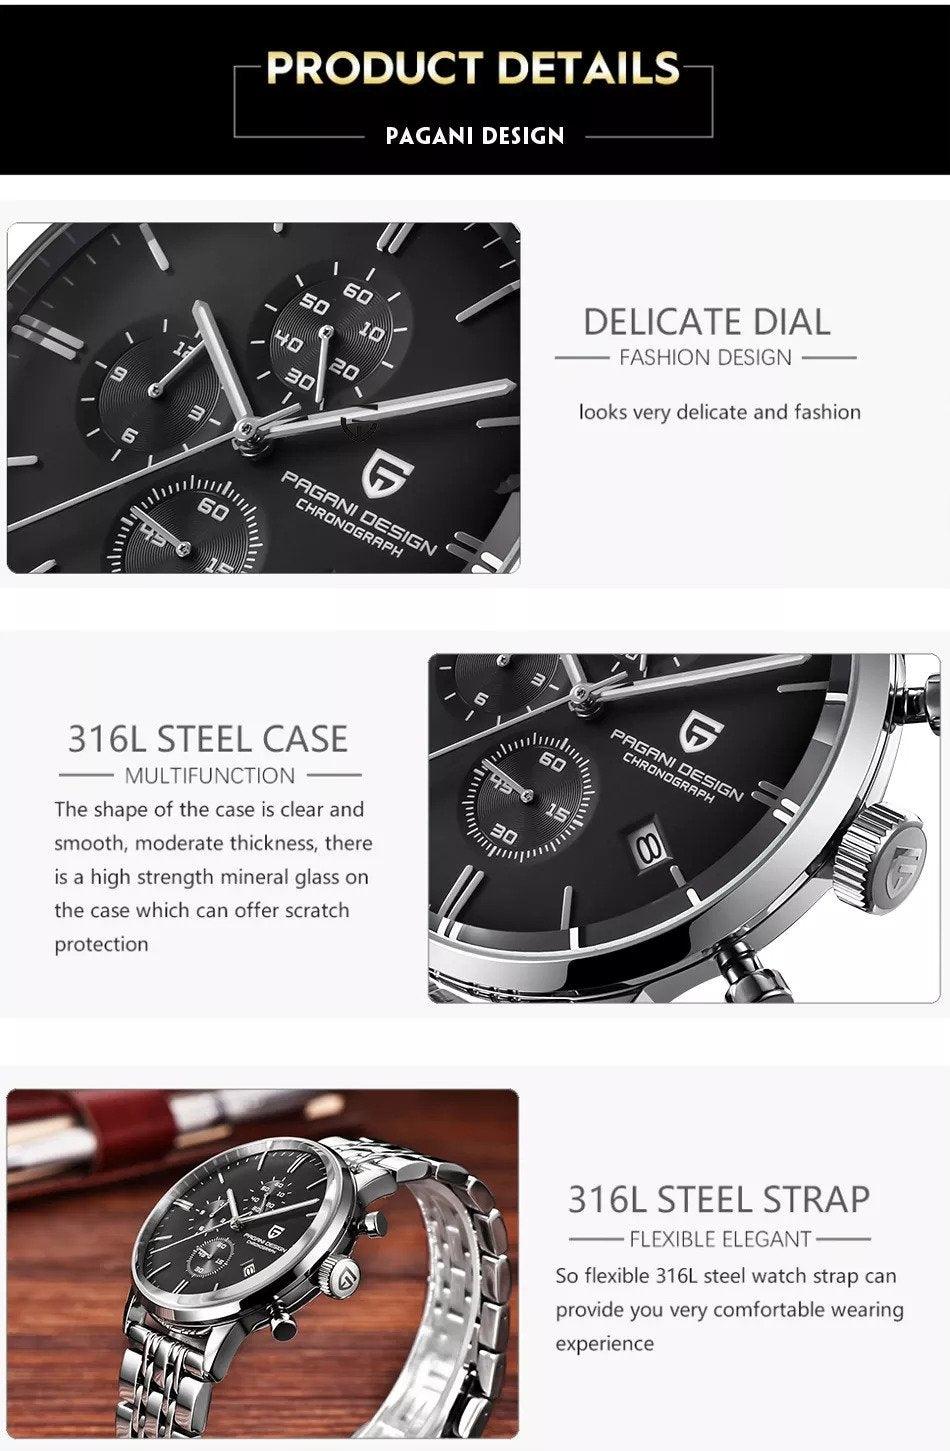 Pagani Design PD-2720K Chronograph (Movement Japanese VK67) | Stainless Steel Men's Luxury Watch Sunburst Dial - DREAM WATCHES